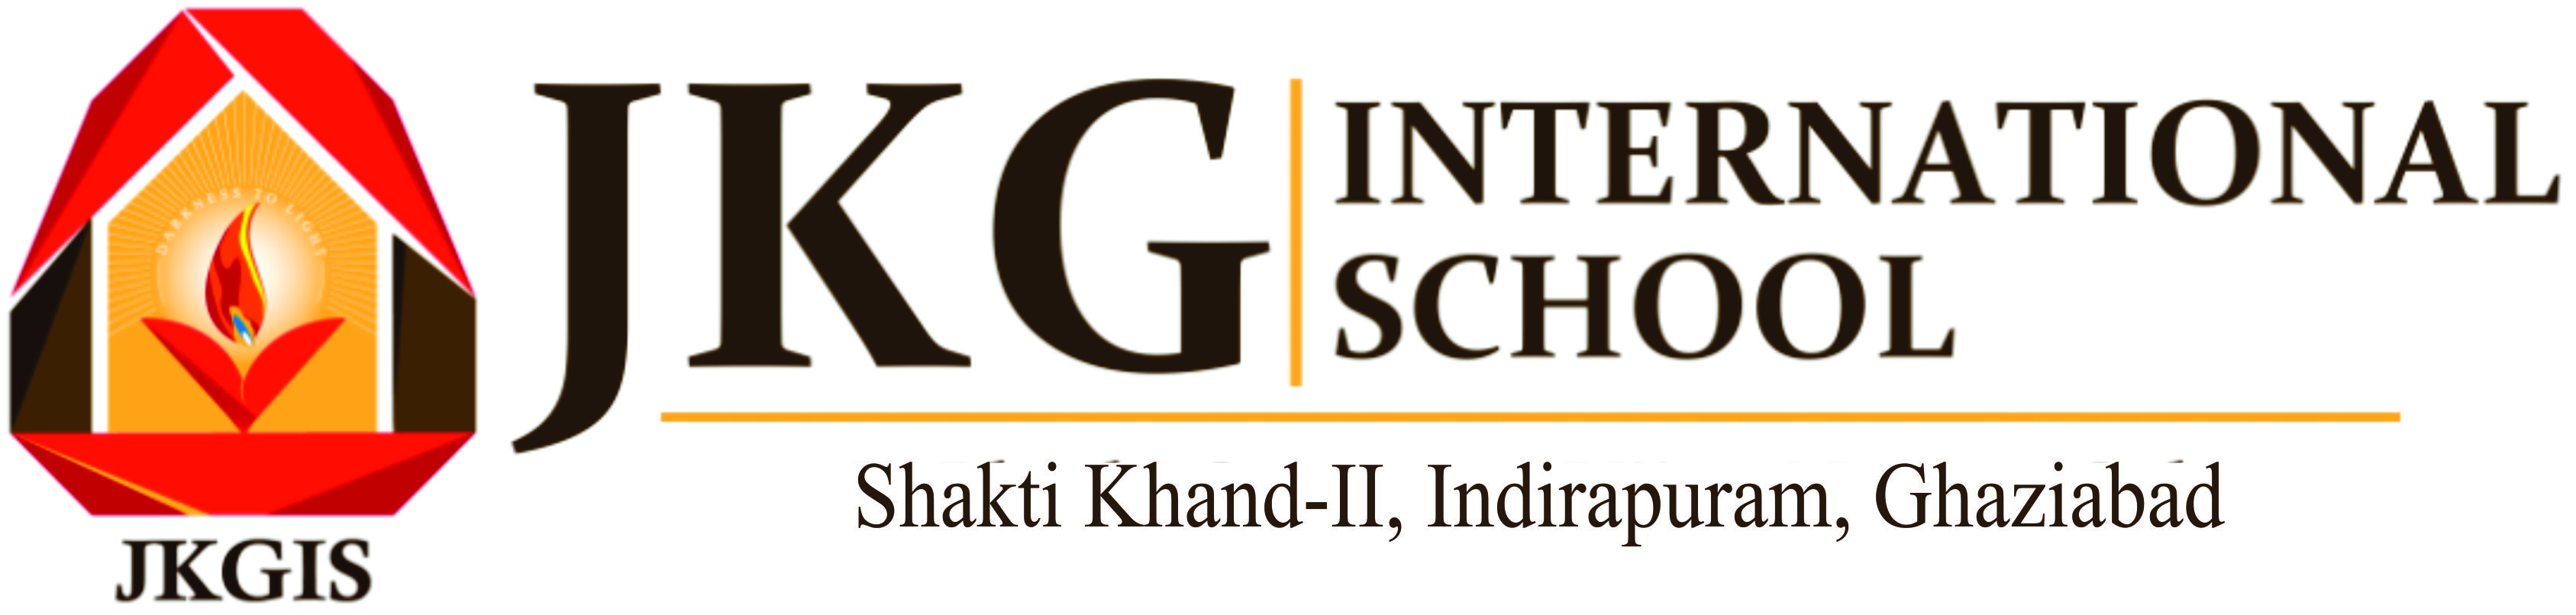 Upcoming Events - JKG International School, Indirapuram